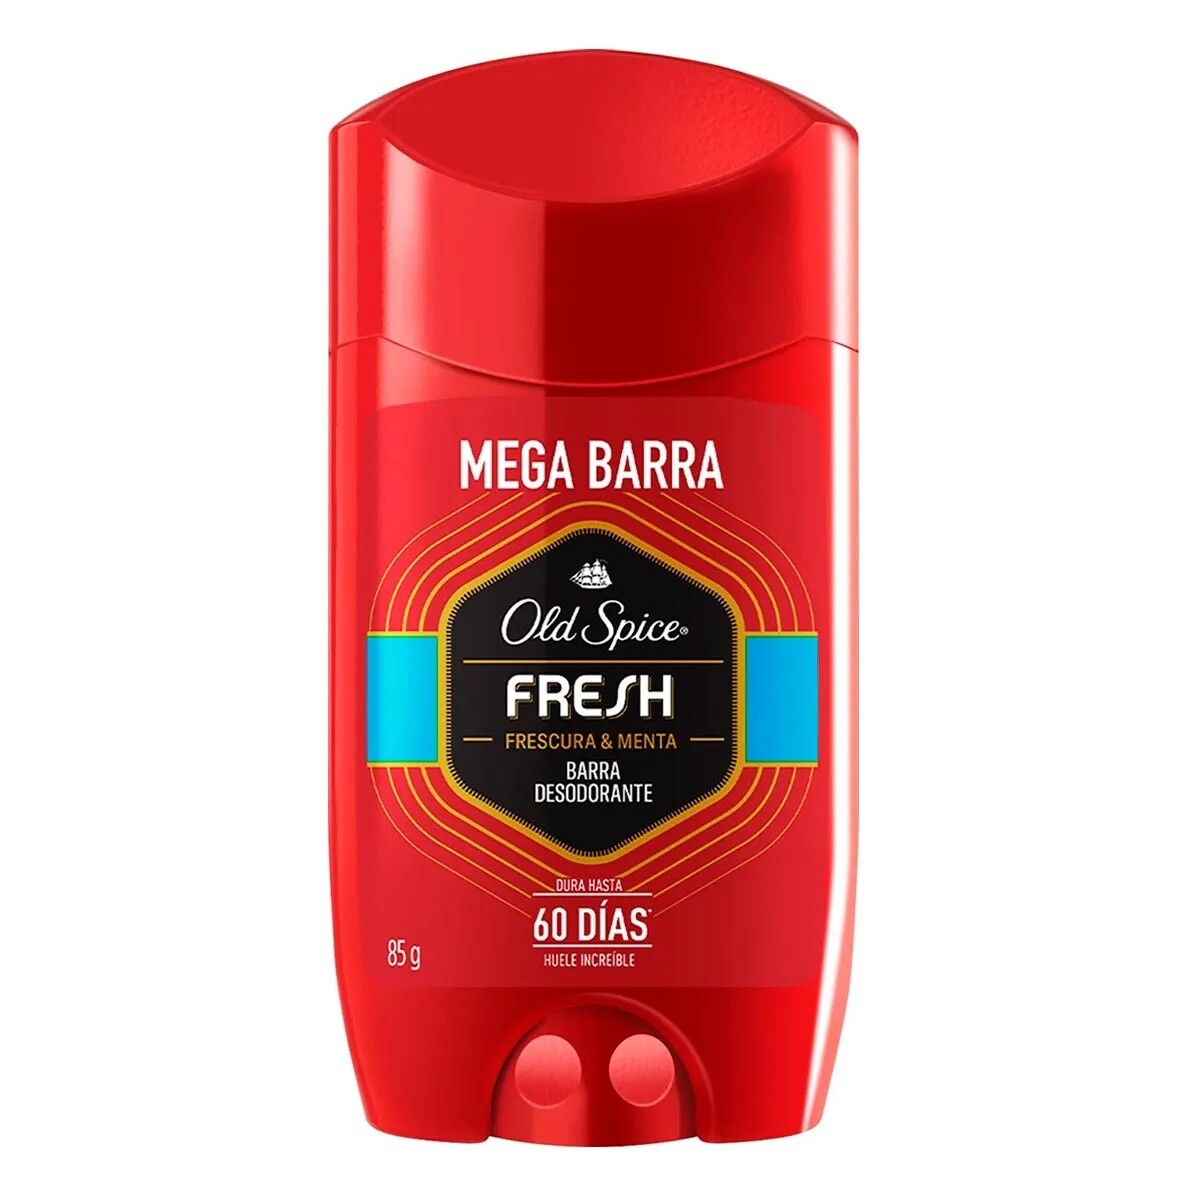 Old Spice Mega Barra Fresh 